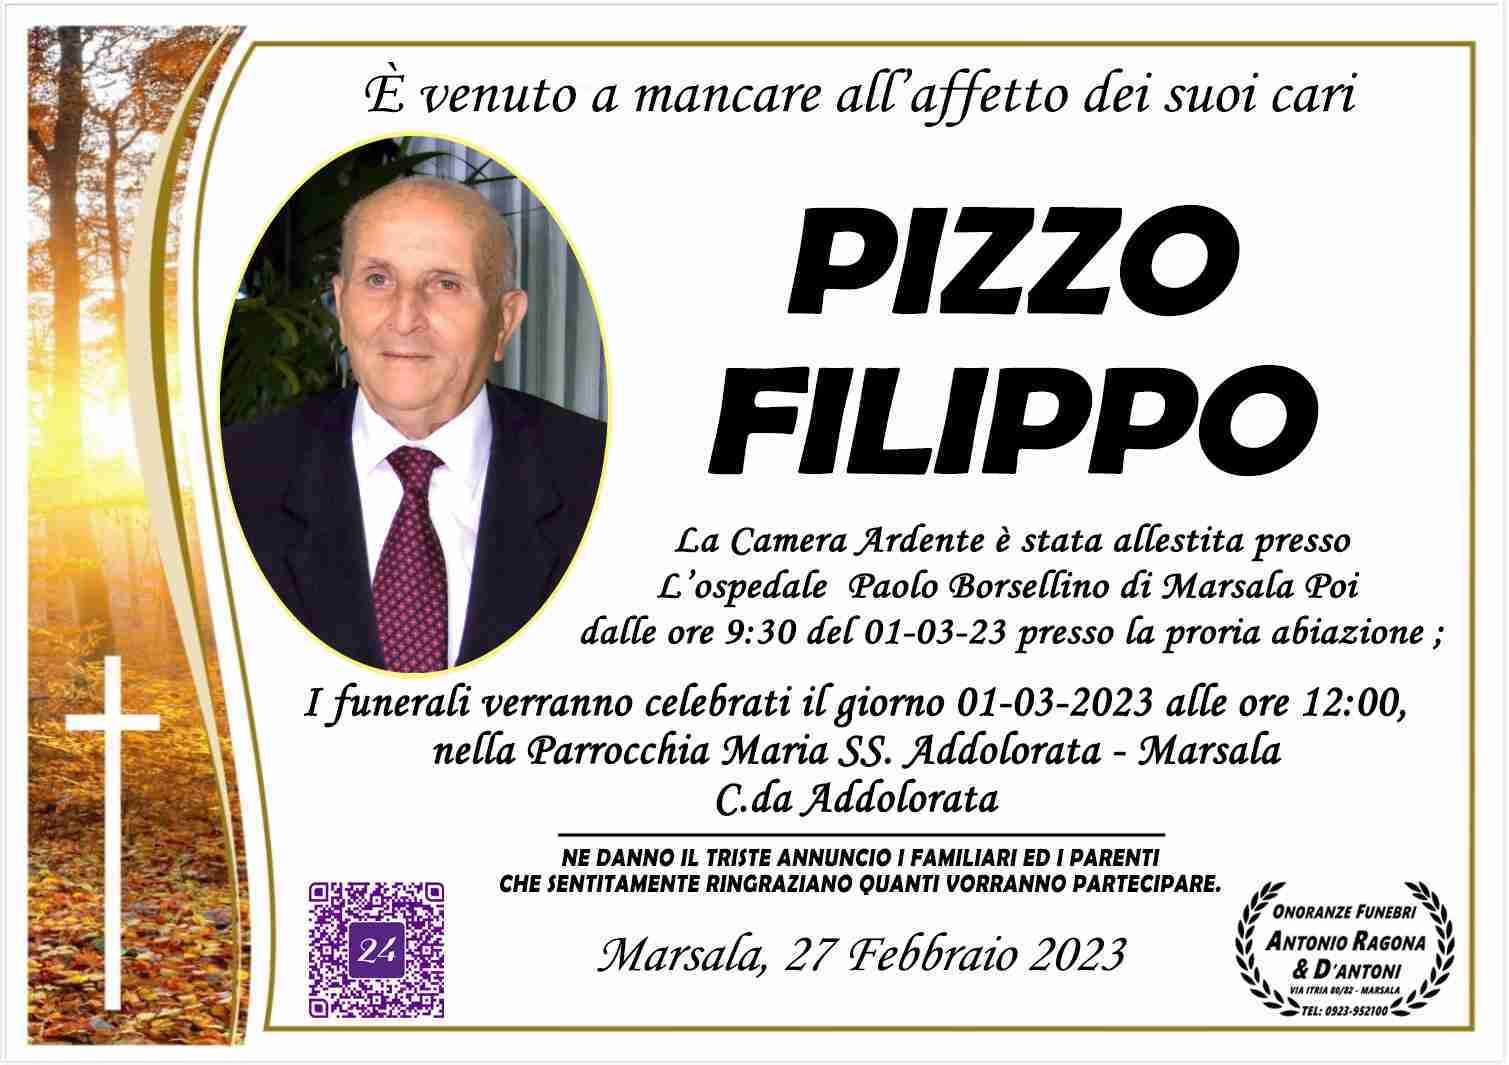 Filippo Pizzo